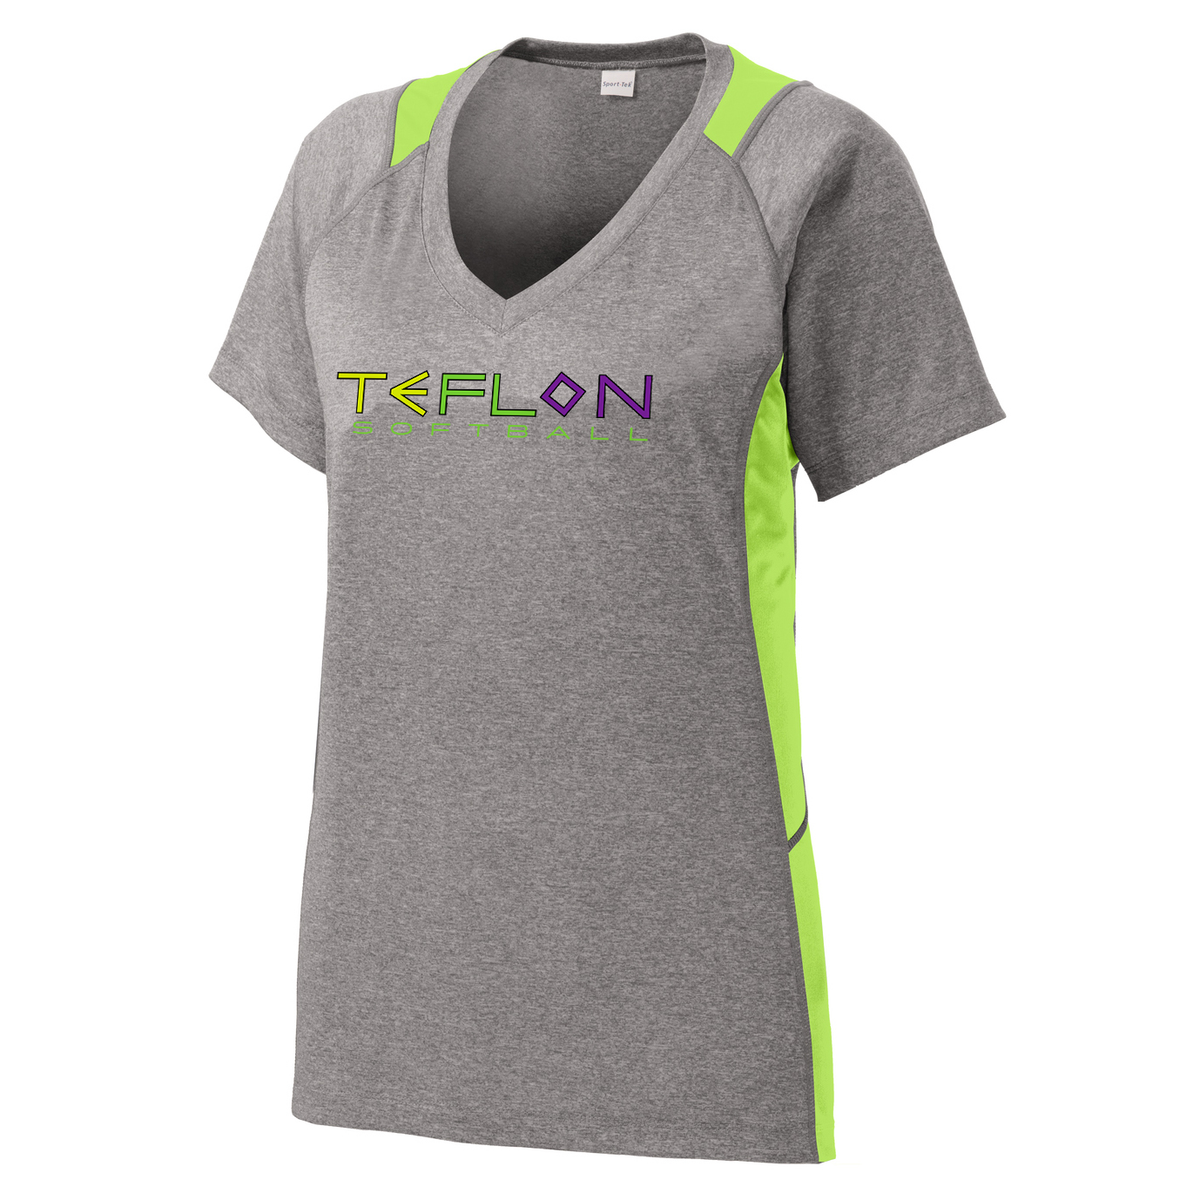 Team Teflon Softball Colorblock Contender Tee